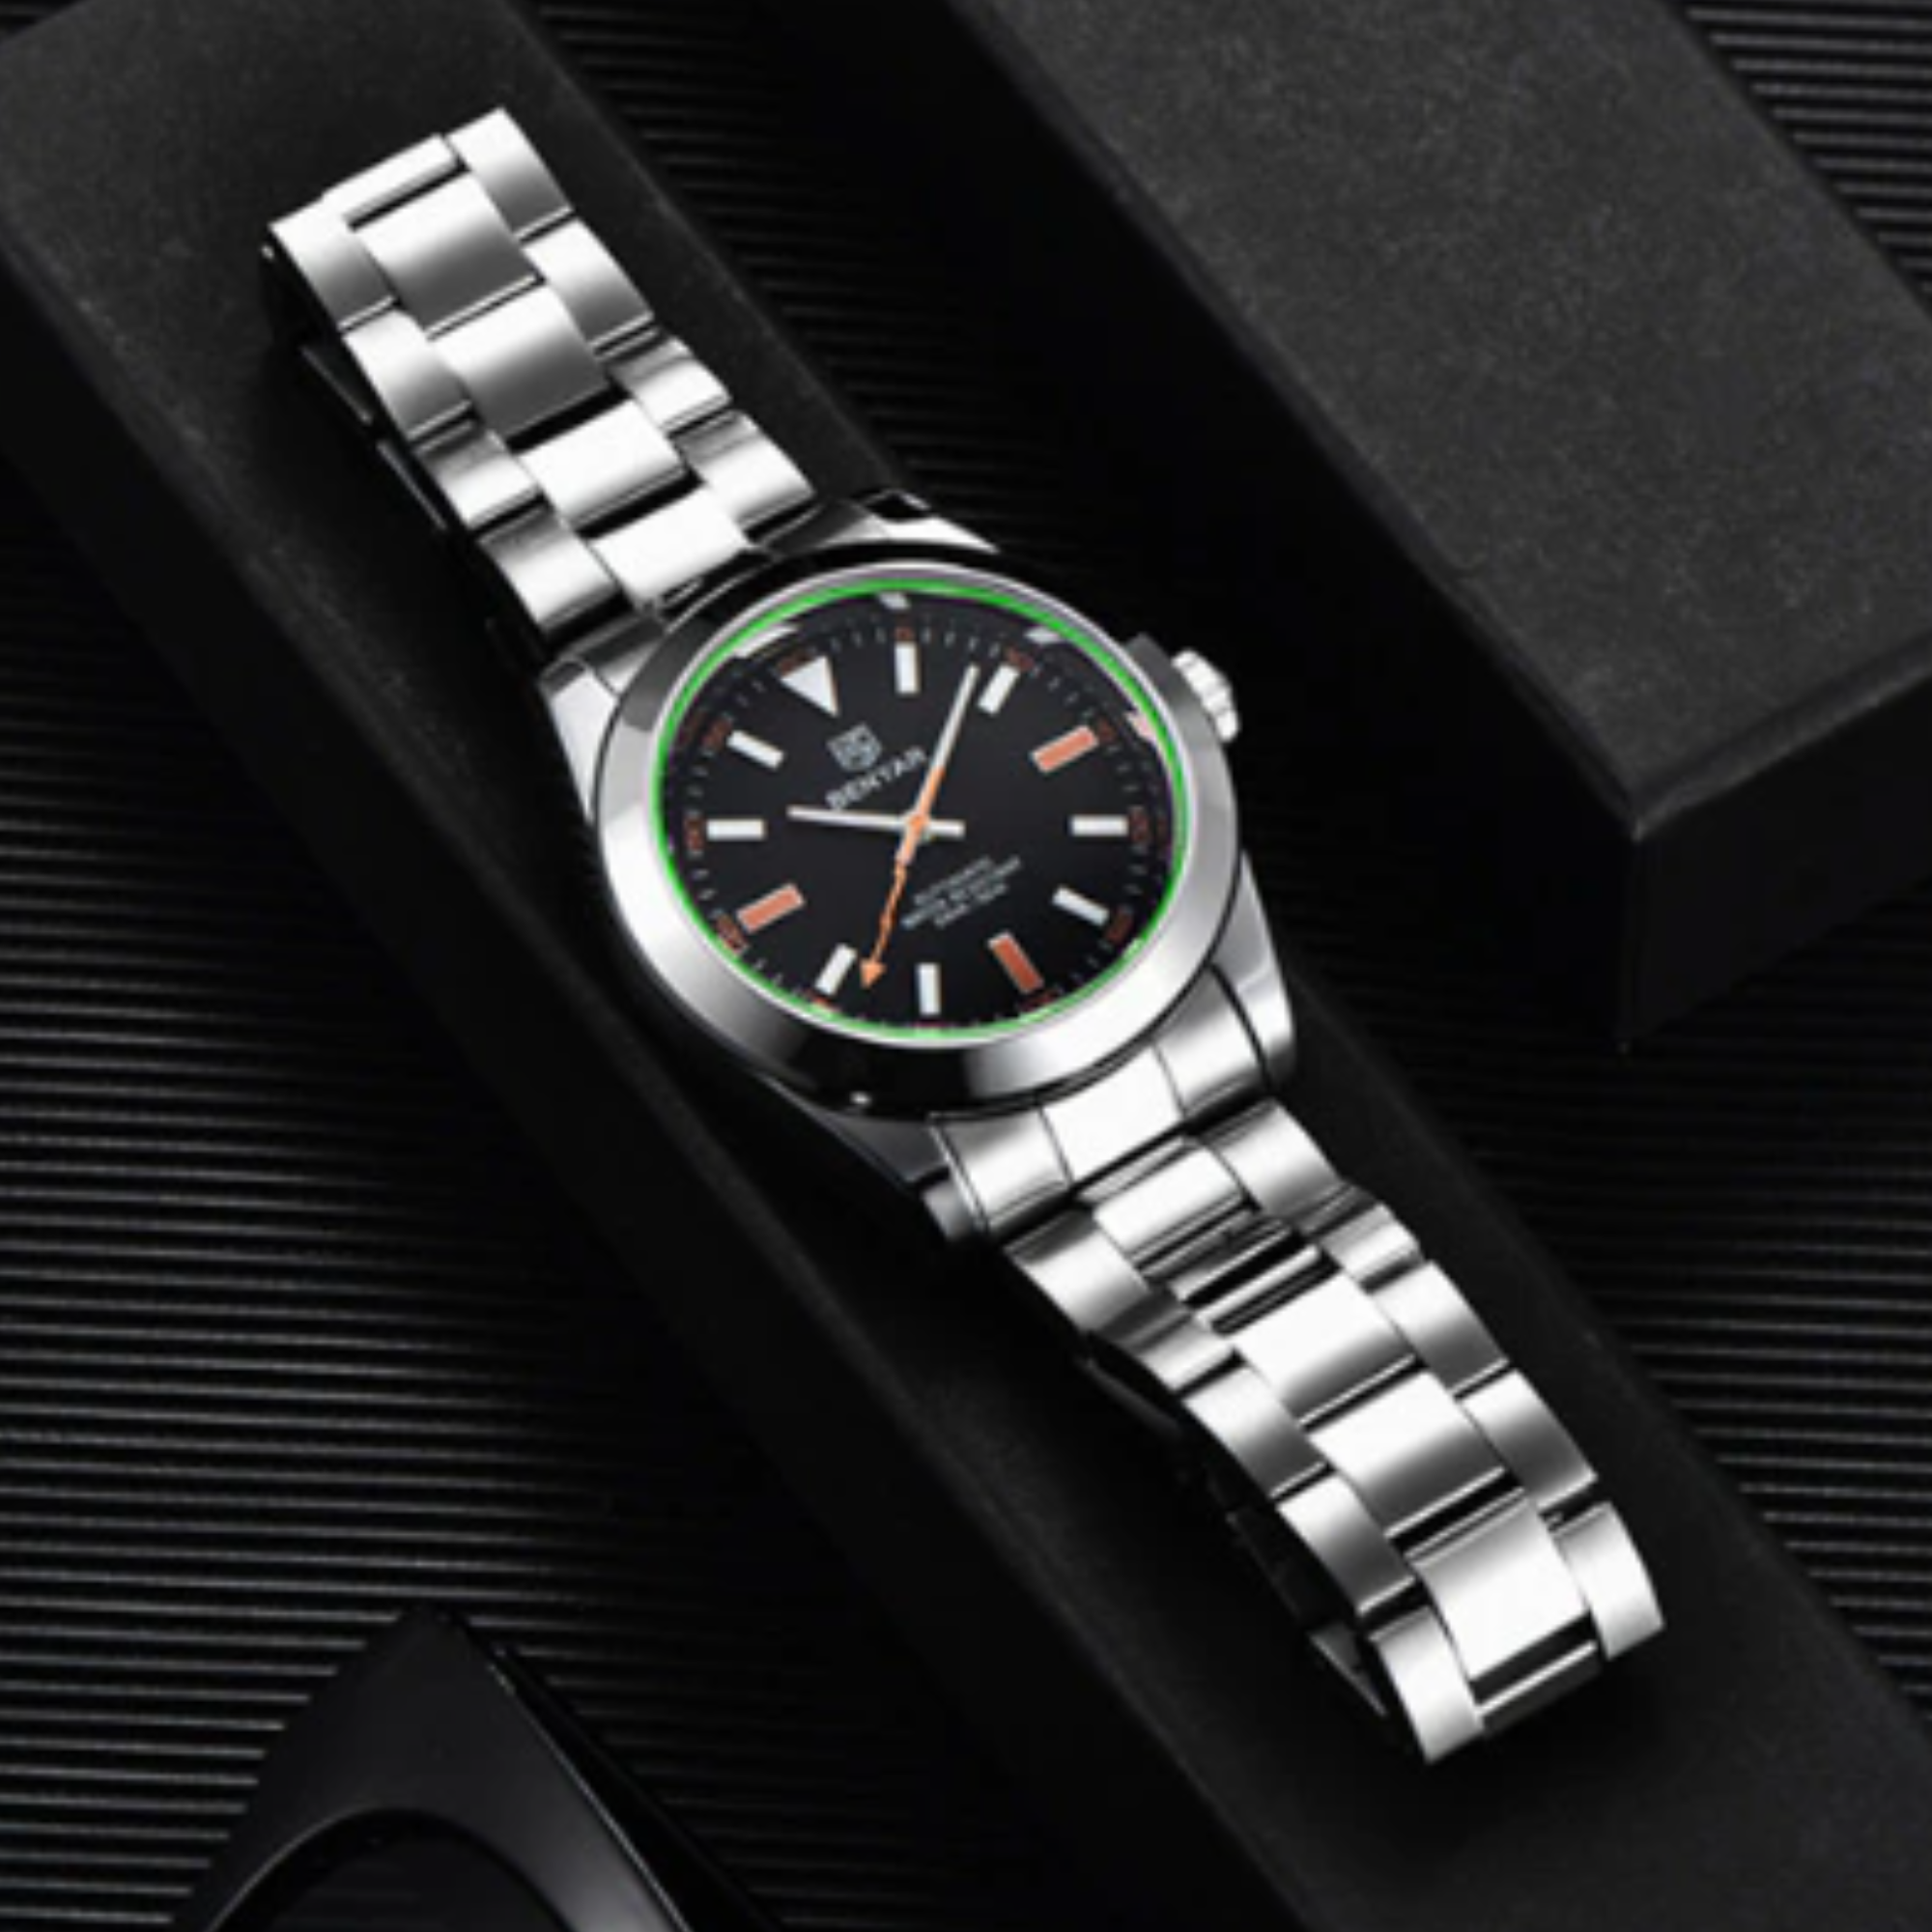 Benyar Latest BY-5176 Minimalistic Luxury Men Automatic Mechanical Watches Waterproof Fashion Watch benyar watches online india dream watches